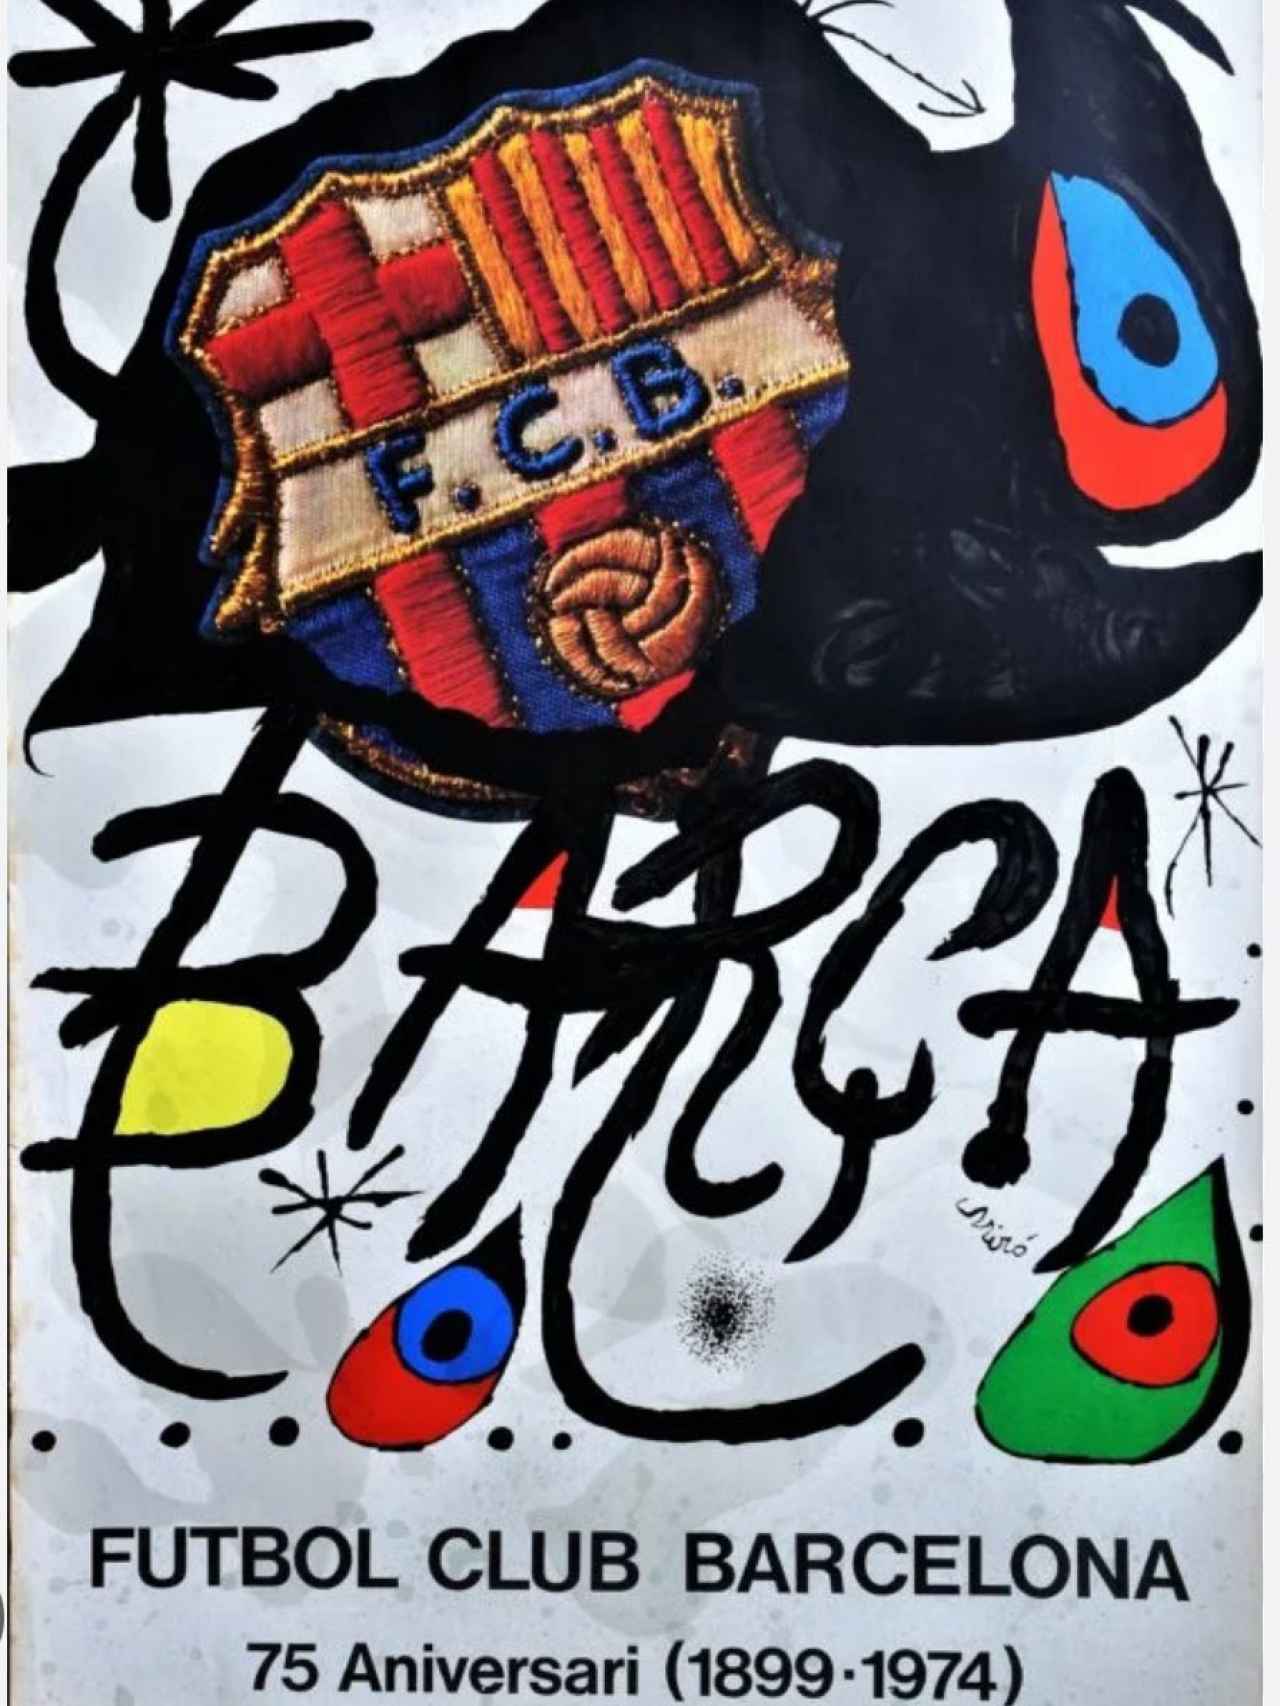 El cartel vanguardista obra del pintor Joan Miró para el aniversario del Barça